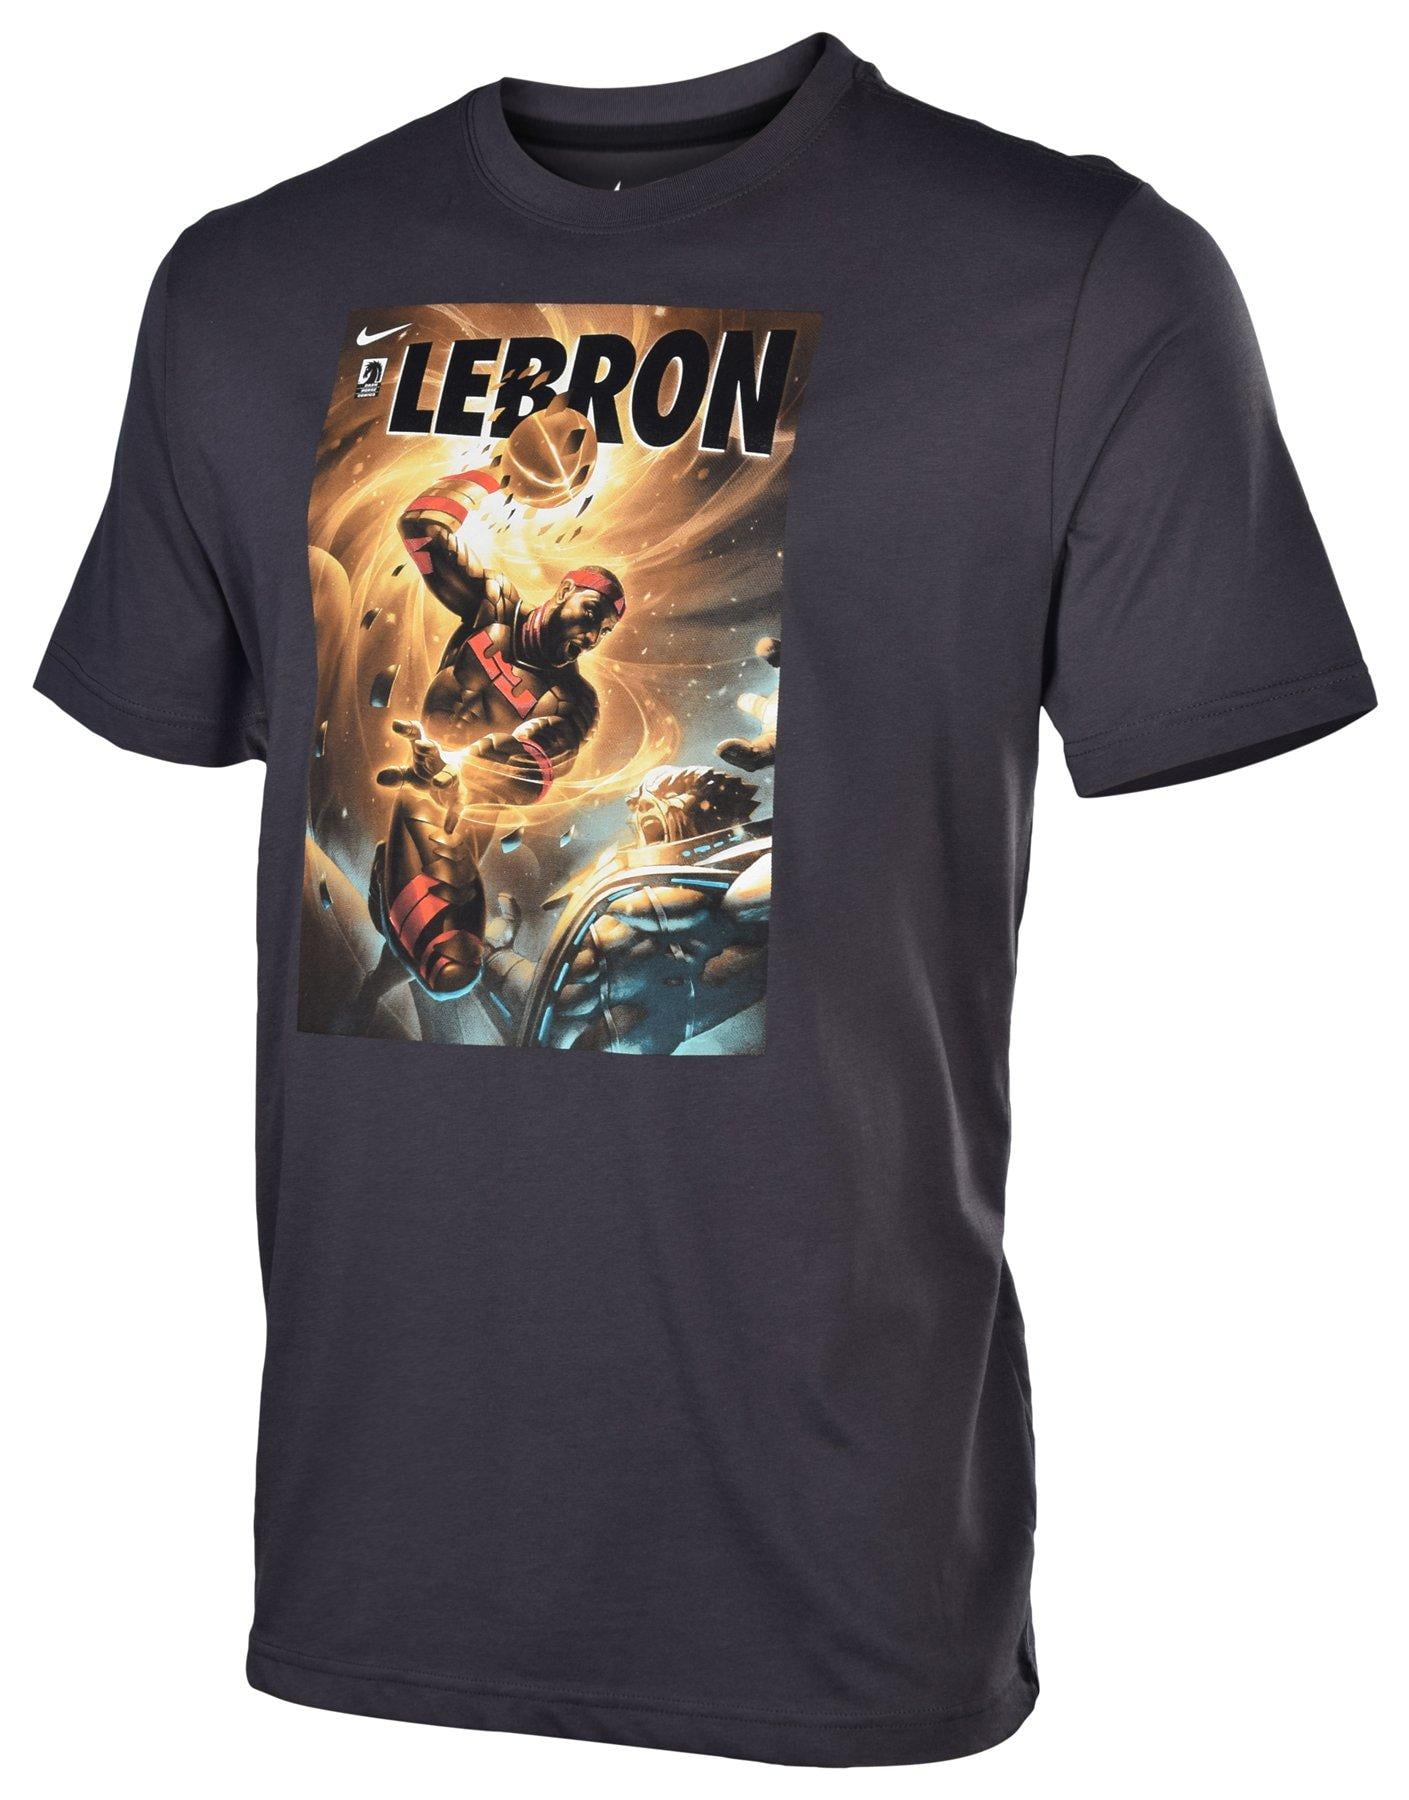 Nike - Nike Hero Lebron Men's Sports Shirt - Walmart.com - Walmart.com